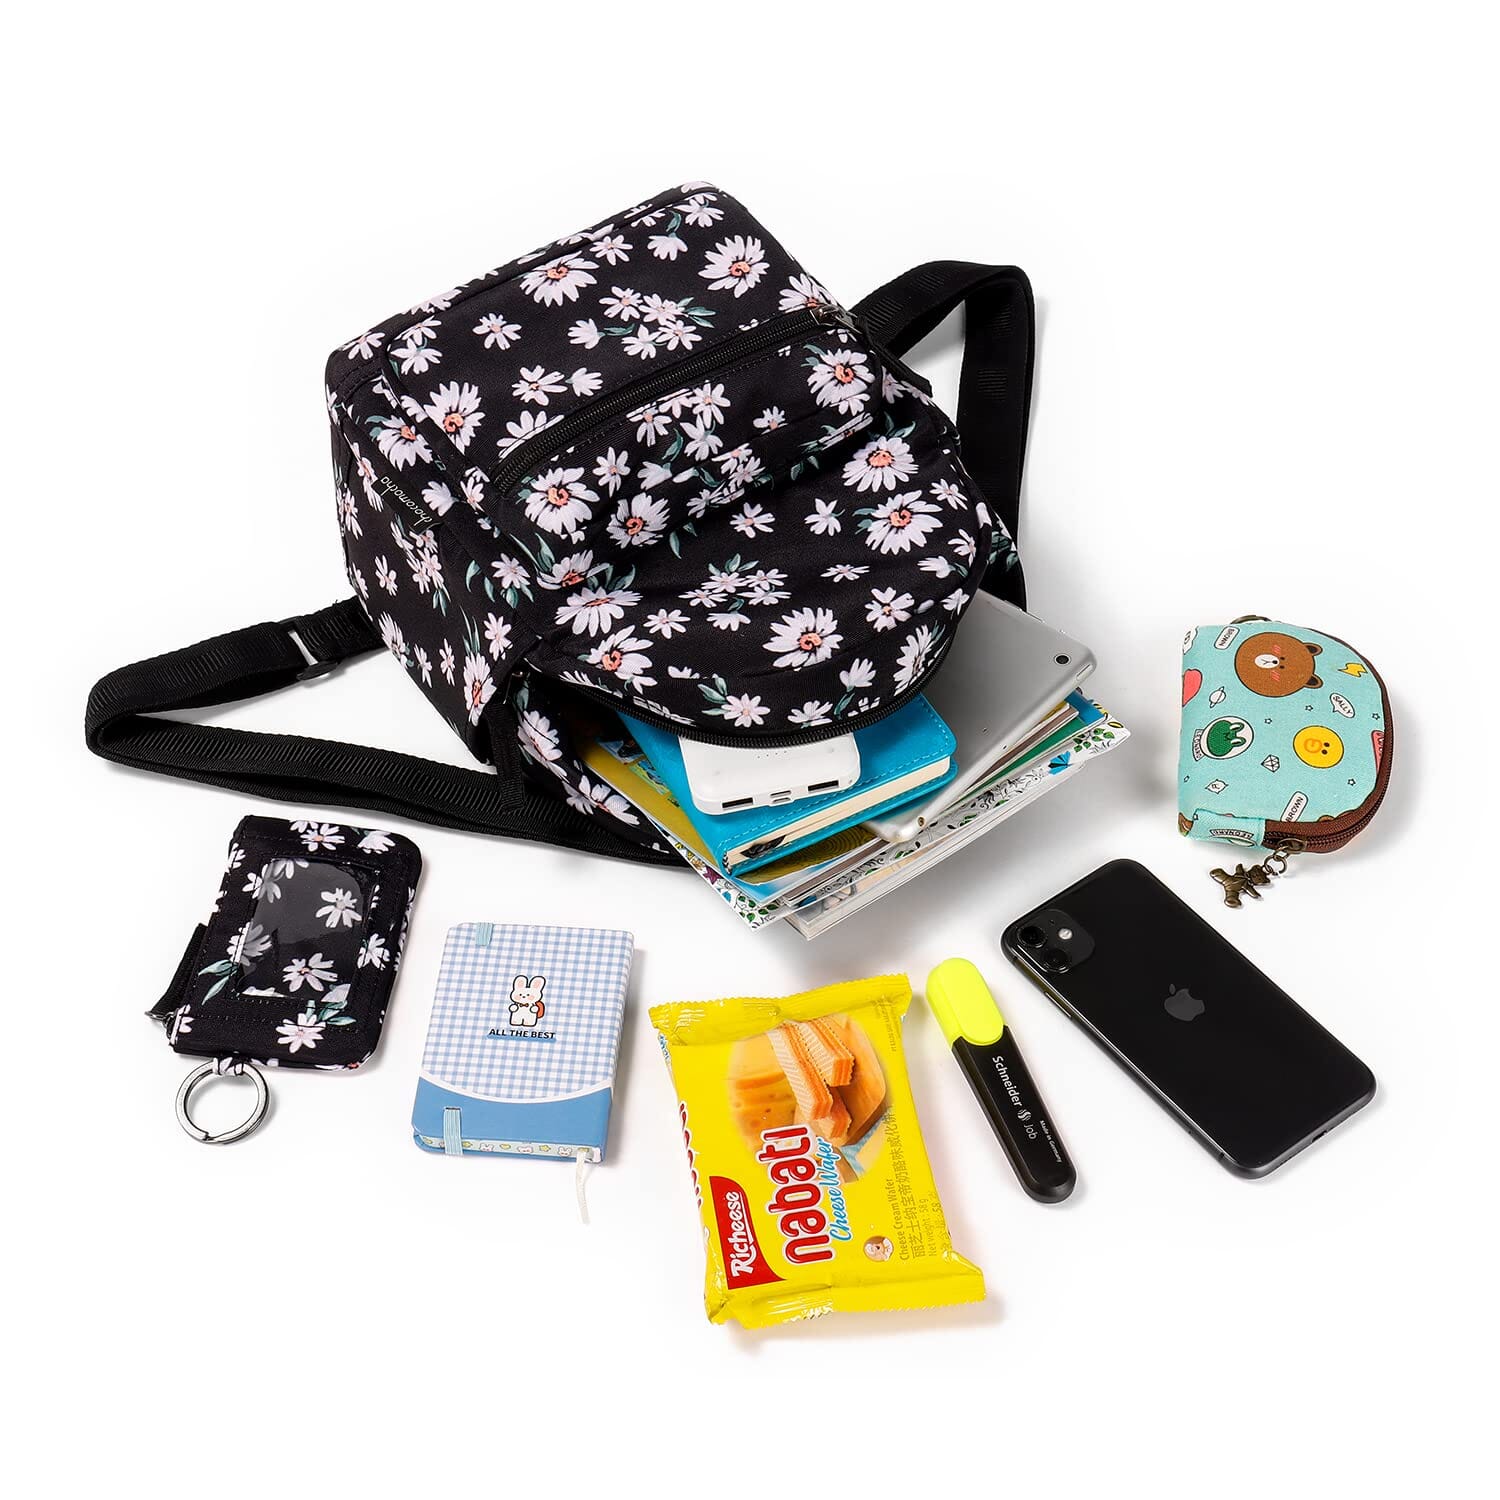 Choco Mocha Black Small Backpack for Girls and Women Teen, Kids Mini Backpack Purse Cute Little Girls Backpack School Travel Bookbag, Daisy chocomochakids 